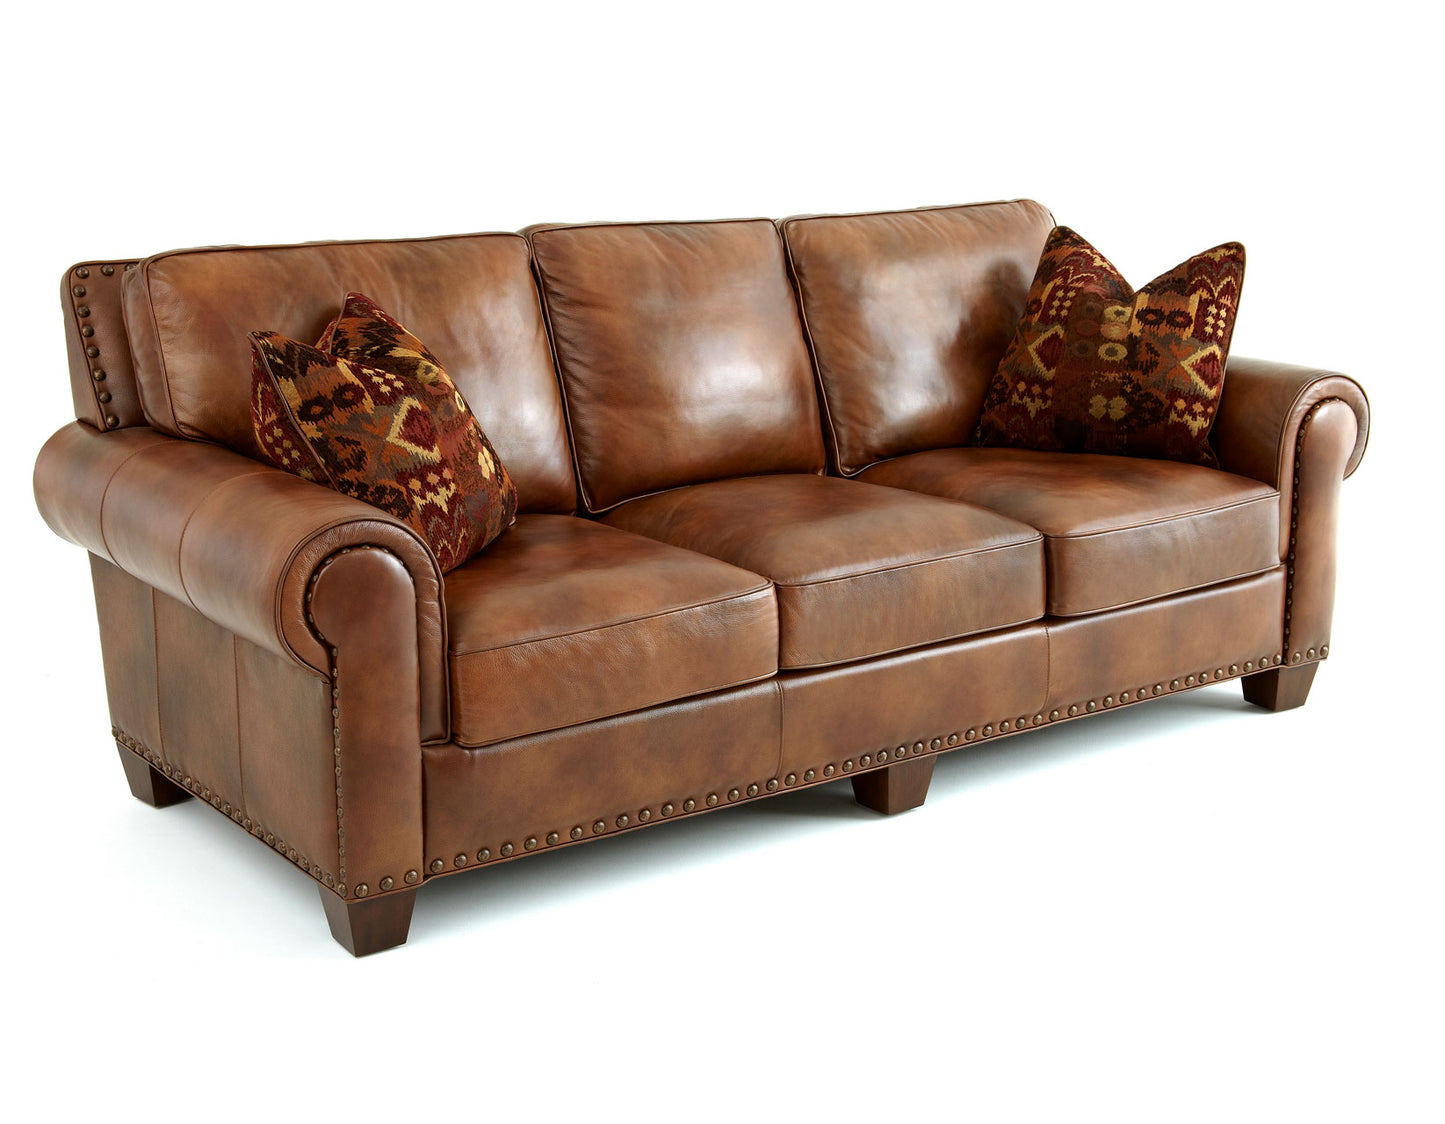 Silverado Leather Sofa, Chair, and Ottoman